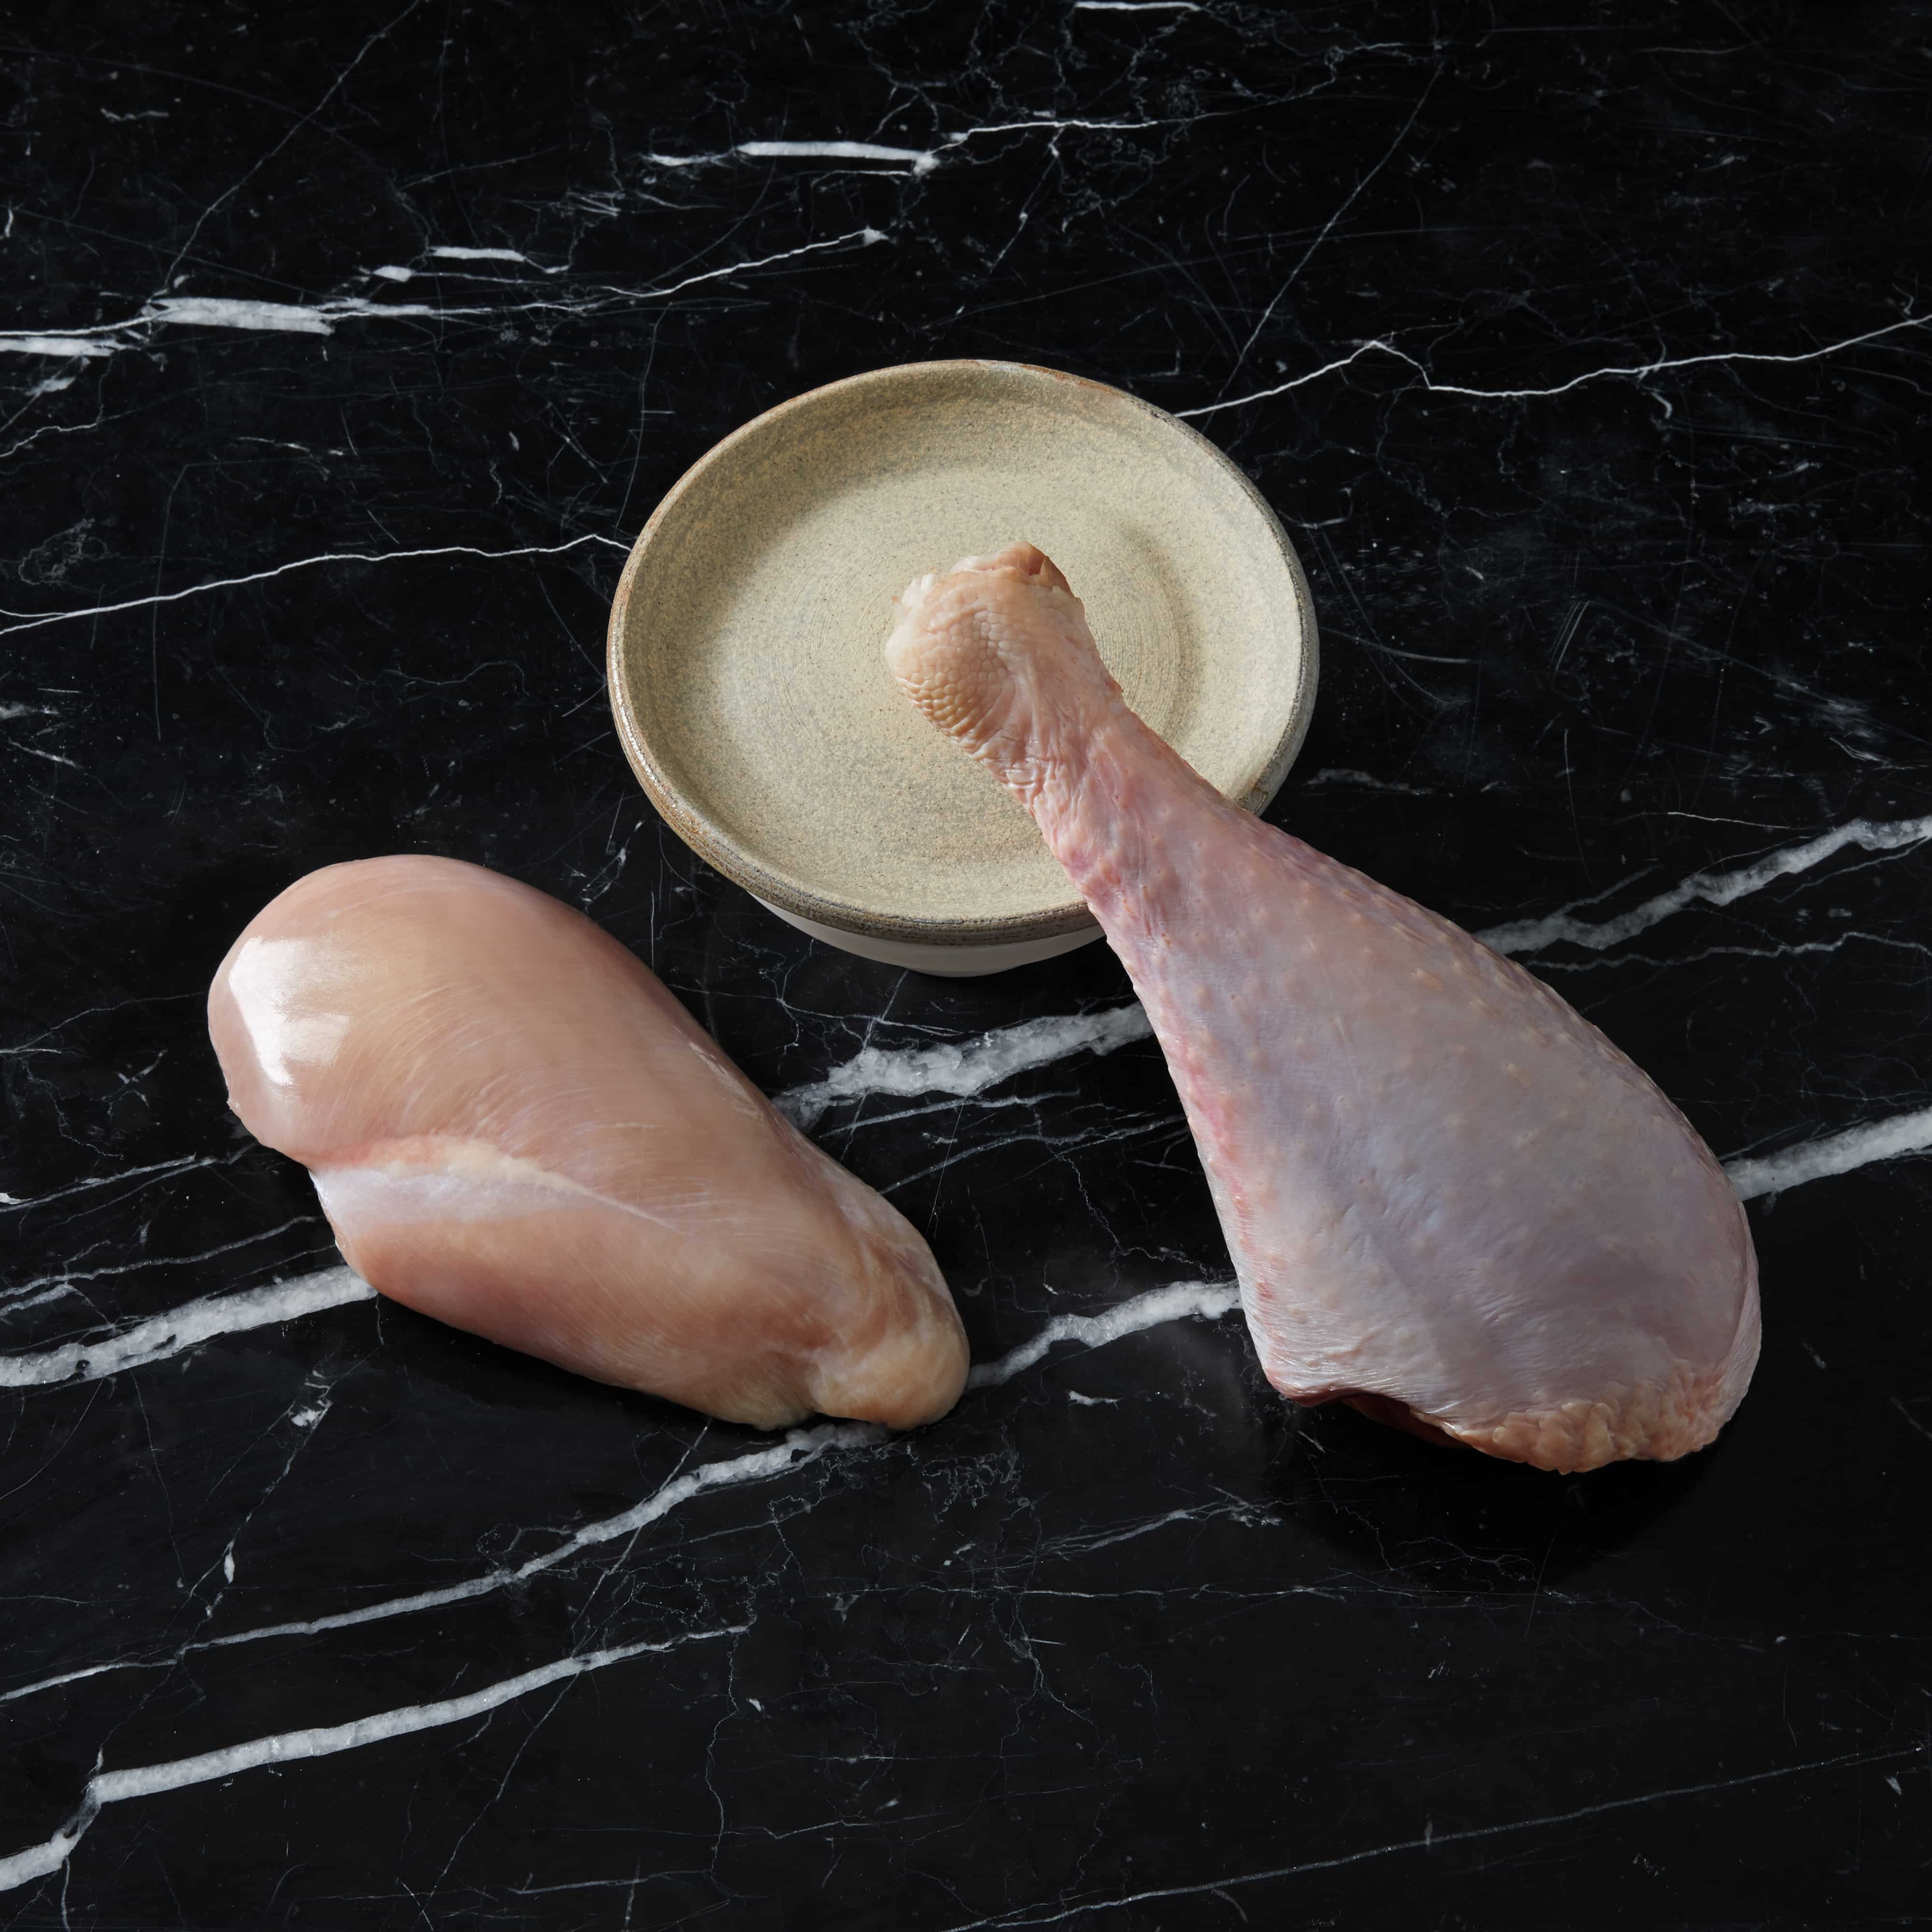 Raw chicken breast and raw turkey leg